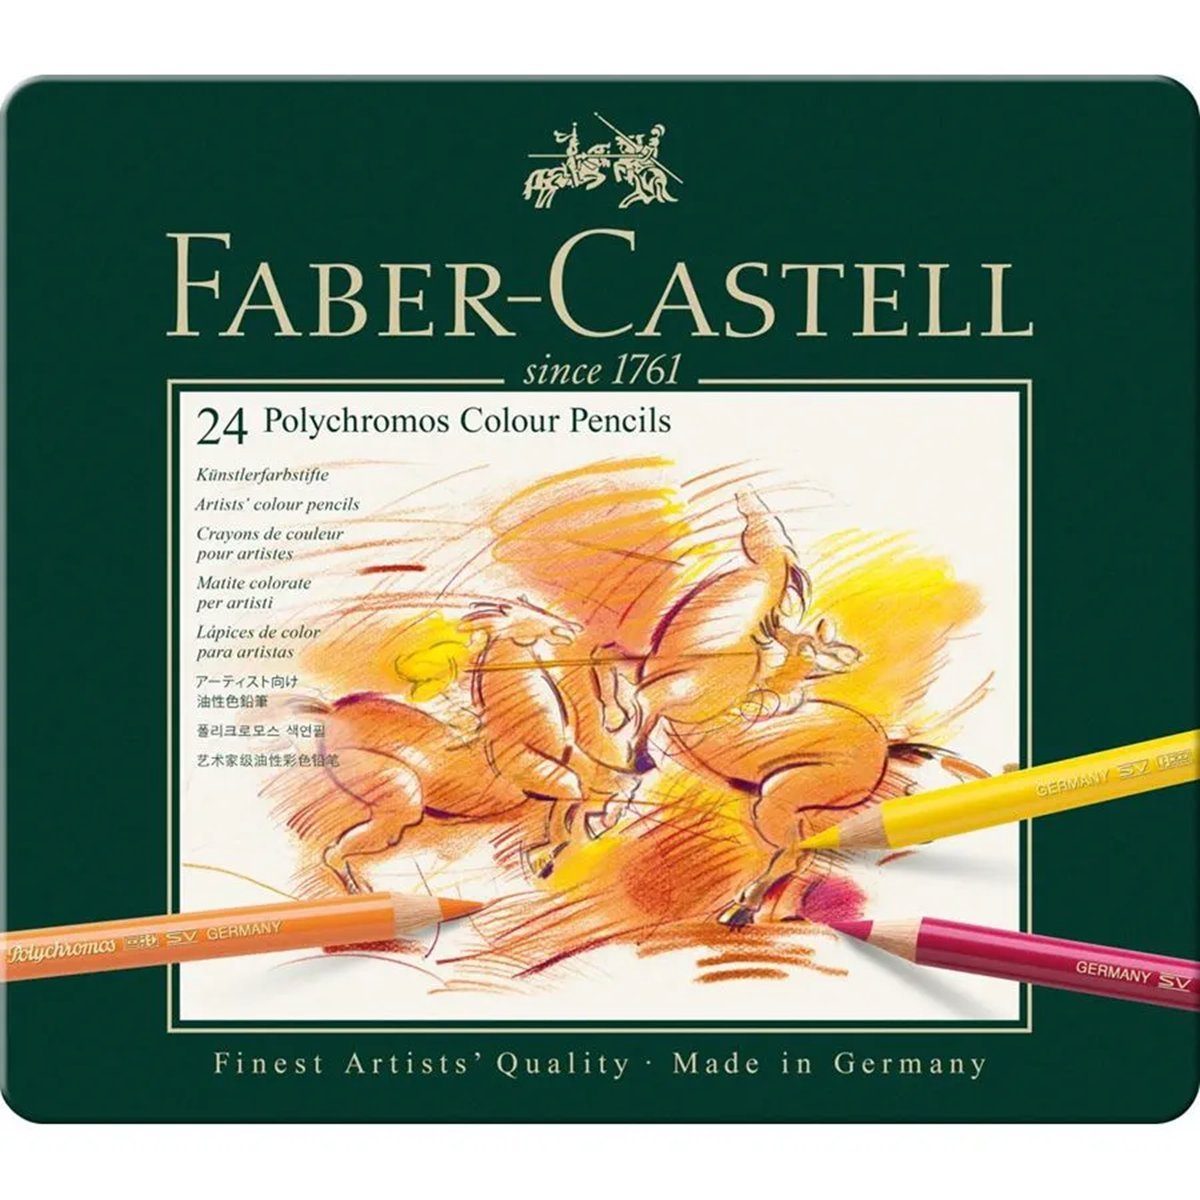 Faber-Castell Buntstift Polychromos Farbstift 24er Metalletui